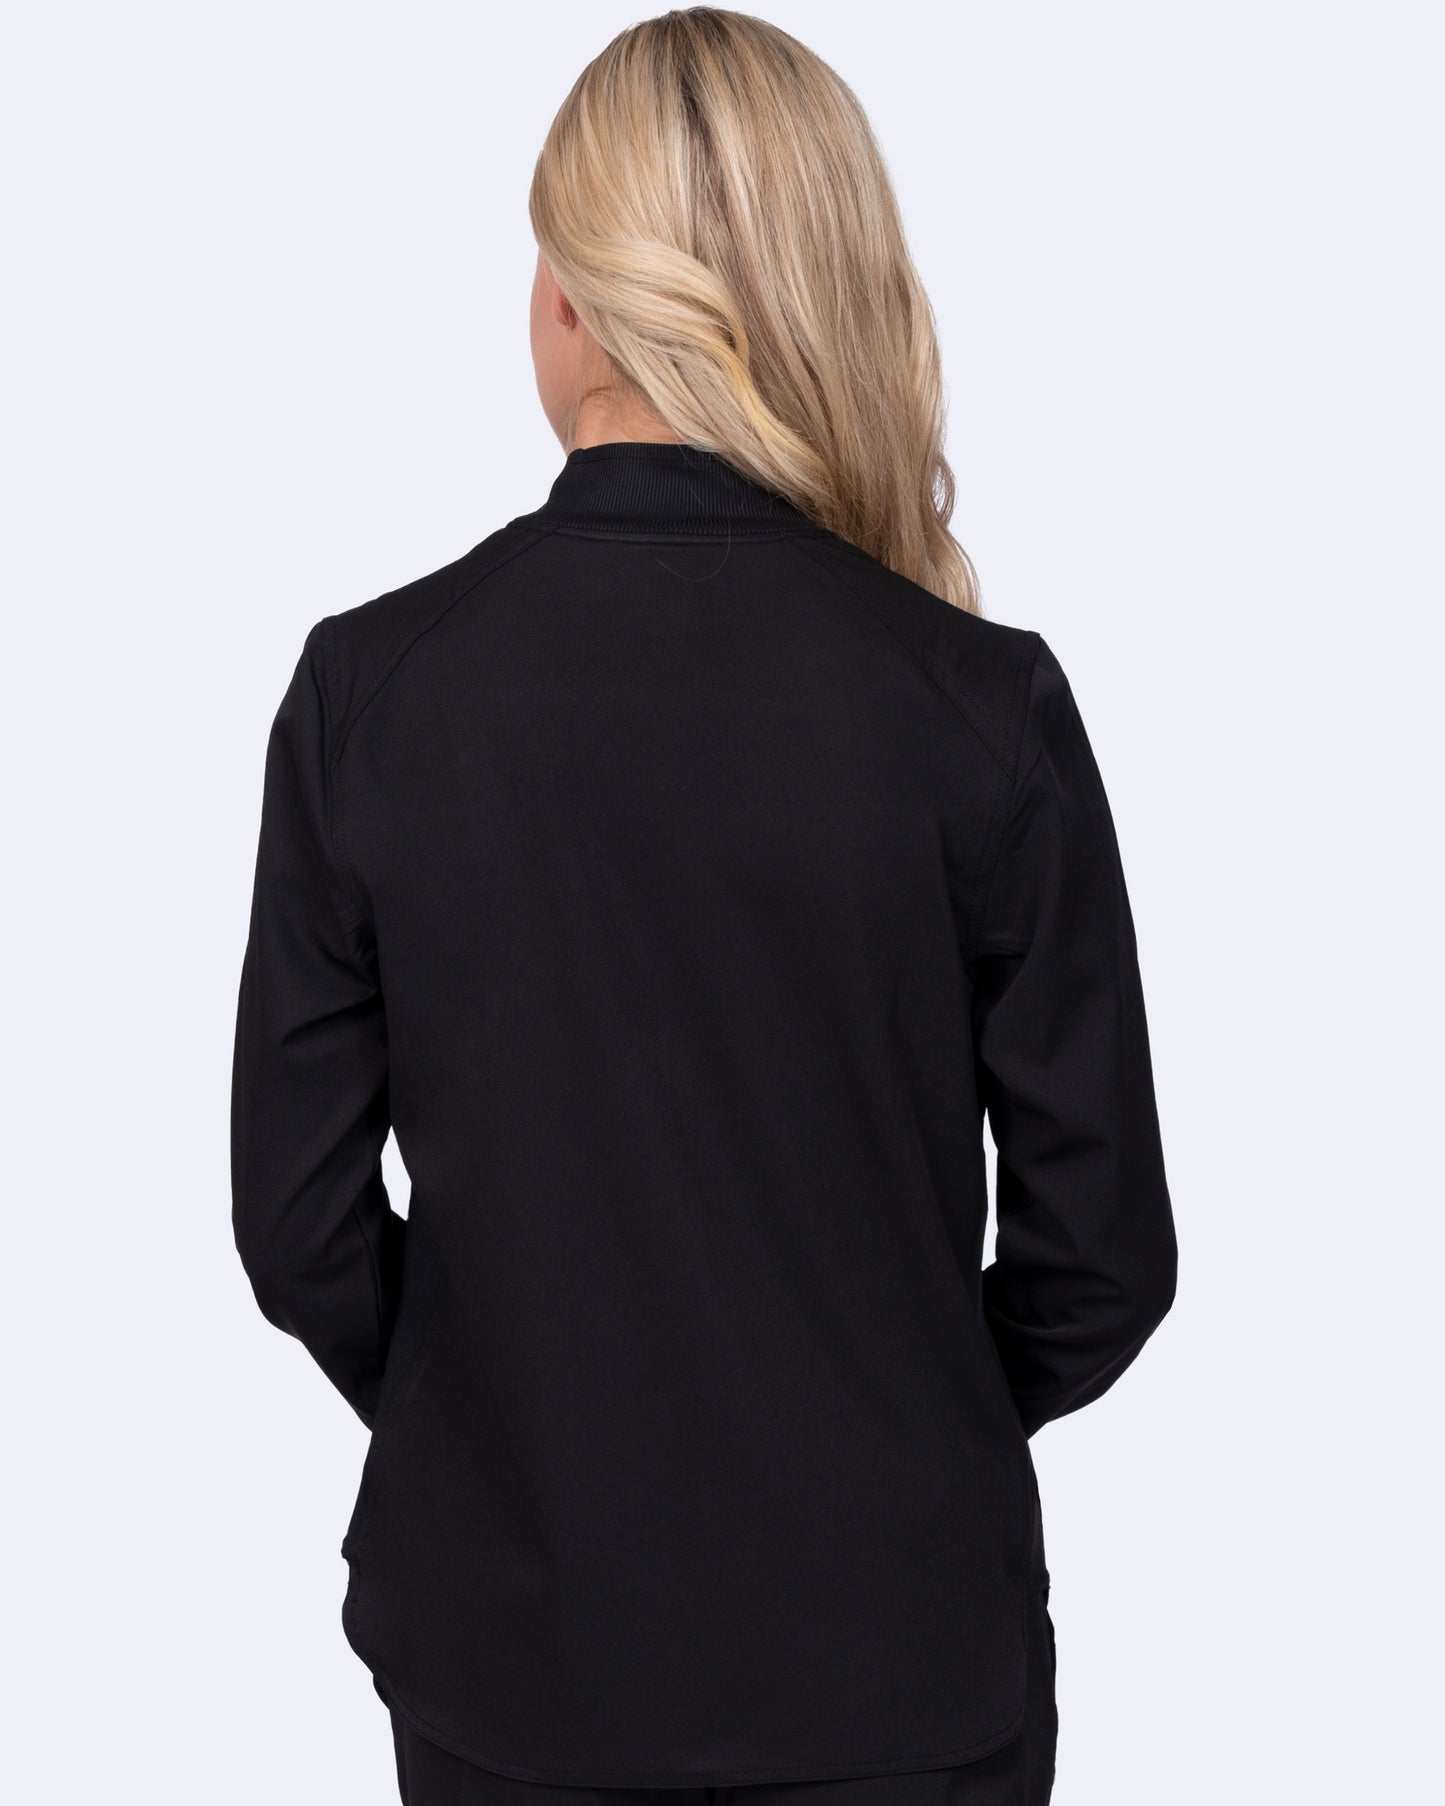 Ava Therese by Zavate 2022 Women's Niki Zip Jacket Black Back